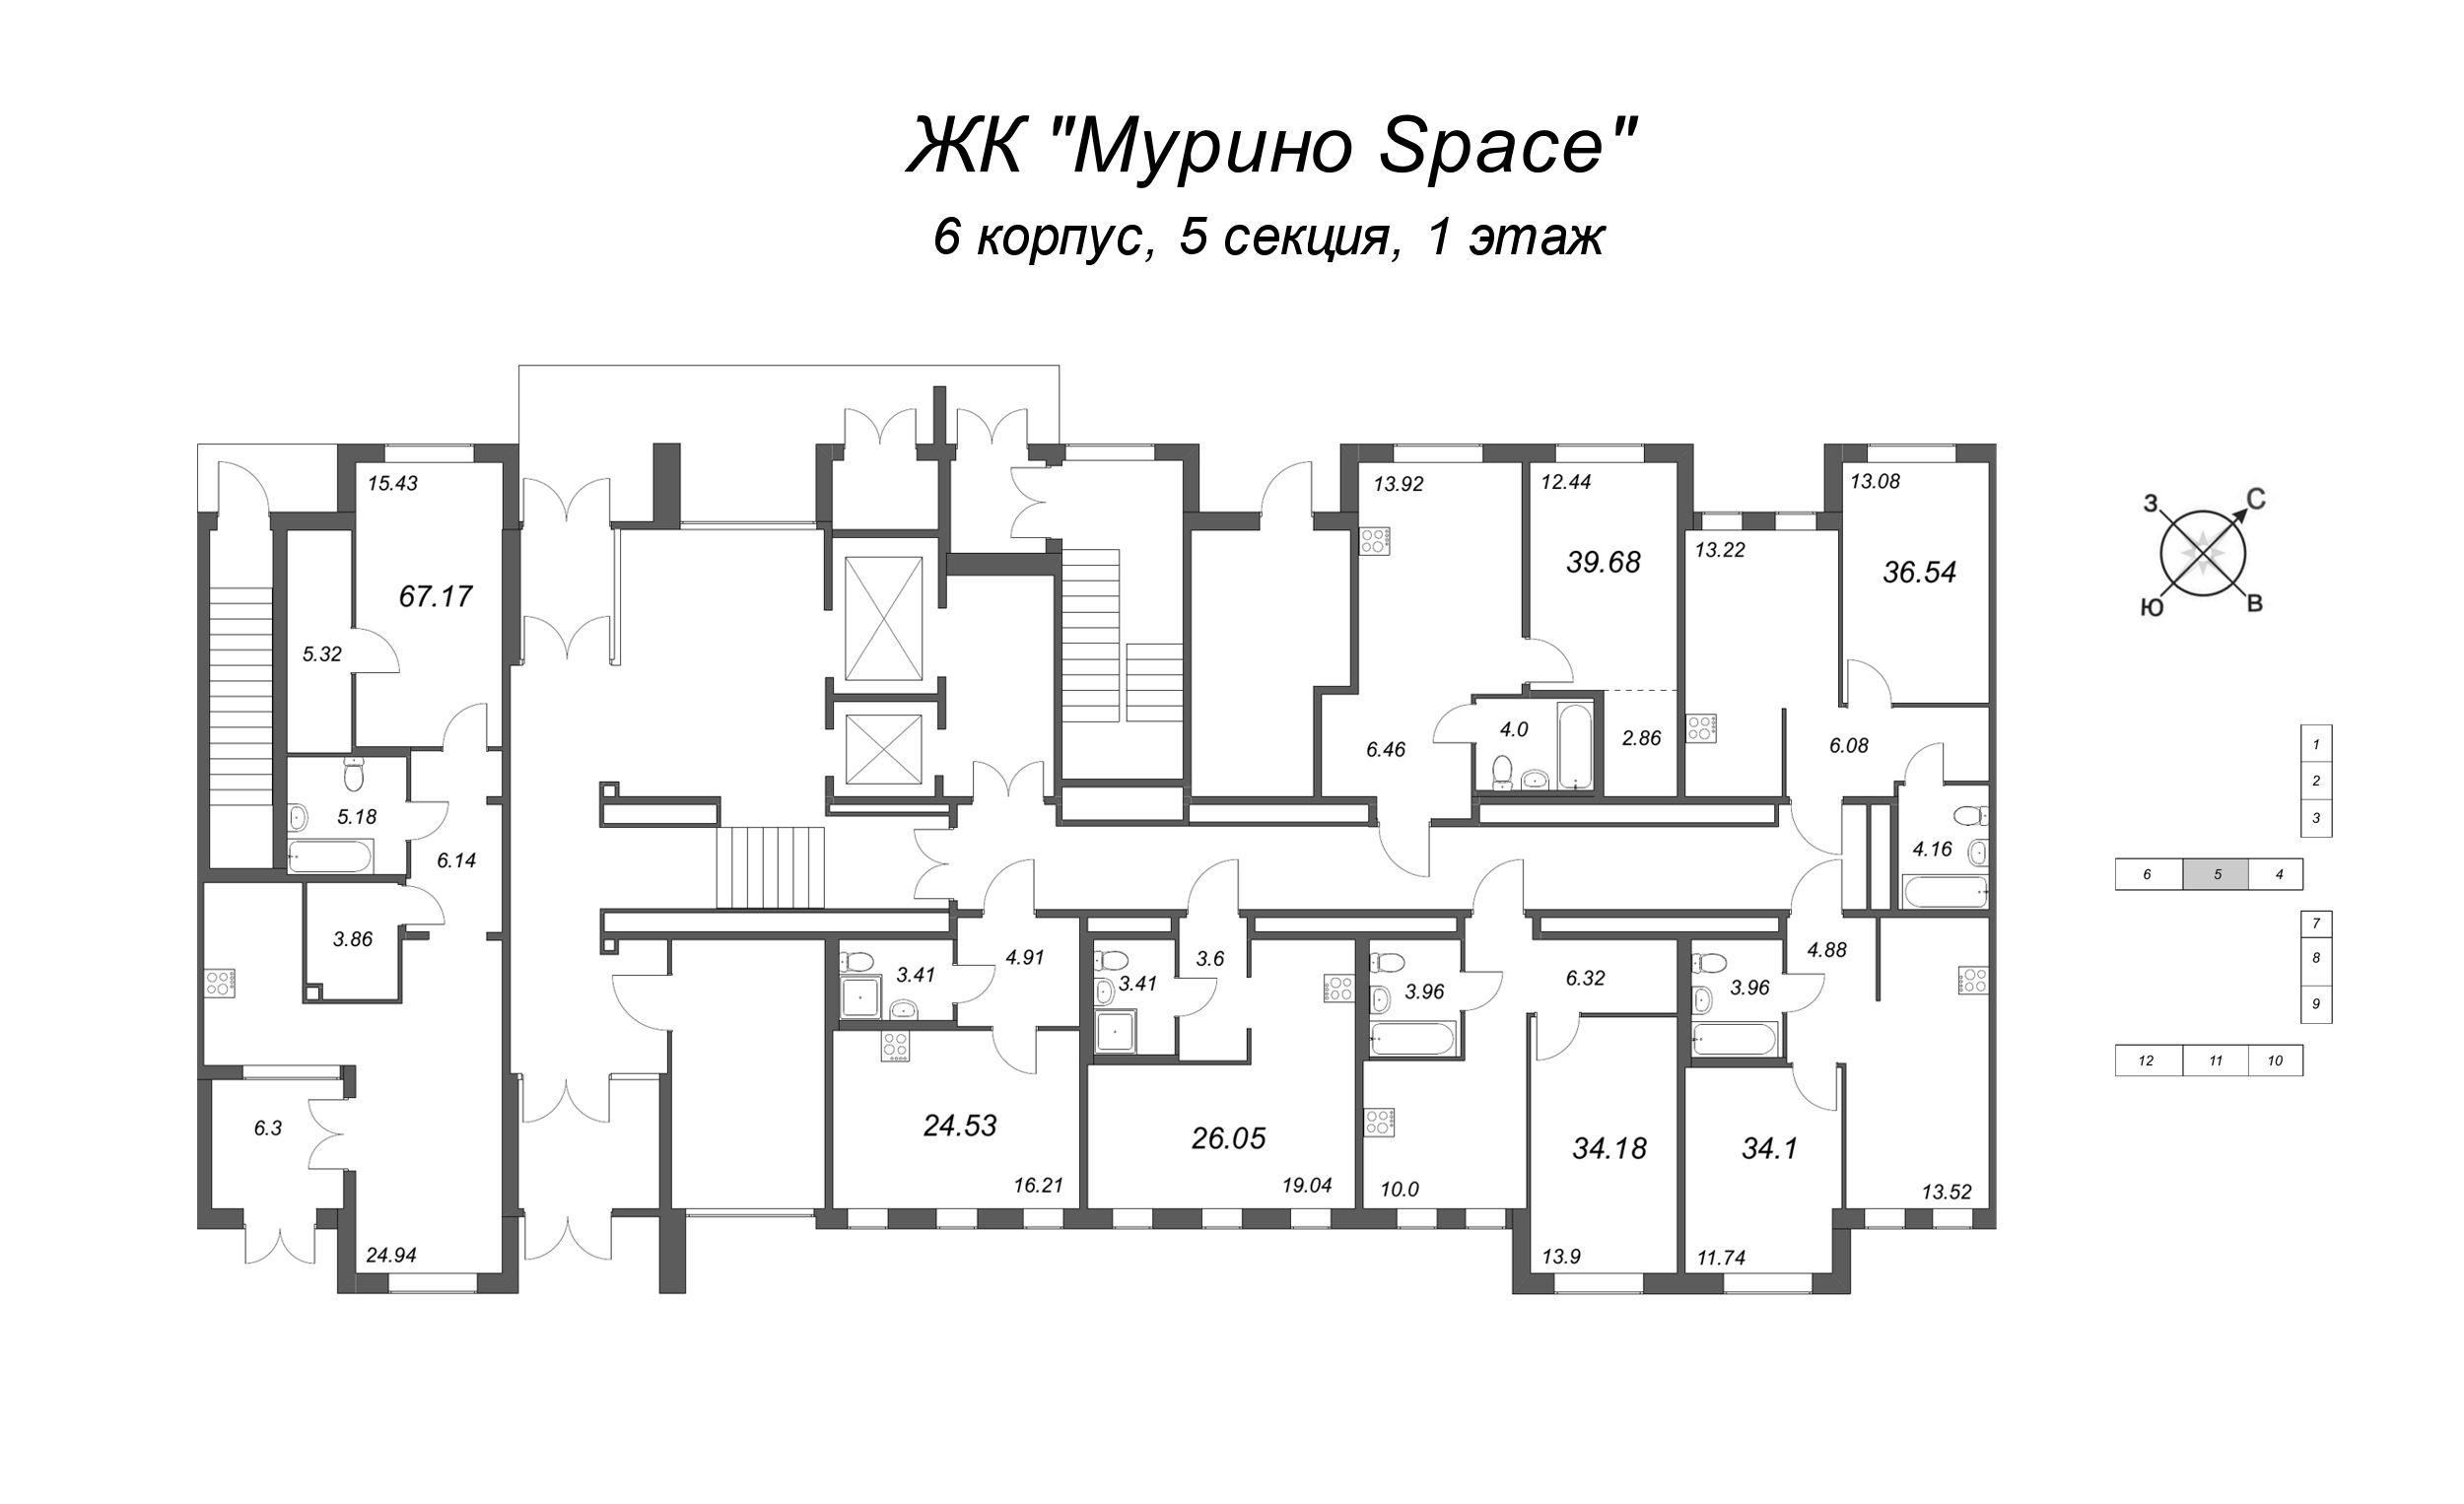 2-комнатная (Евро) квартира, 39.68 м² - планировка этажа